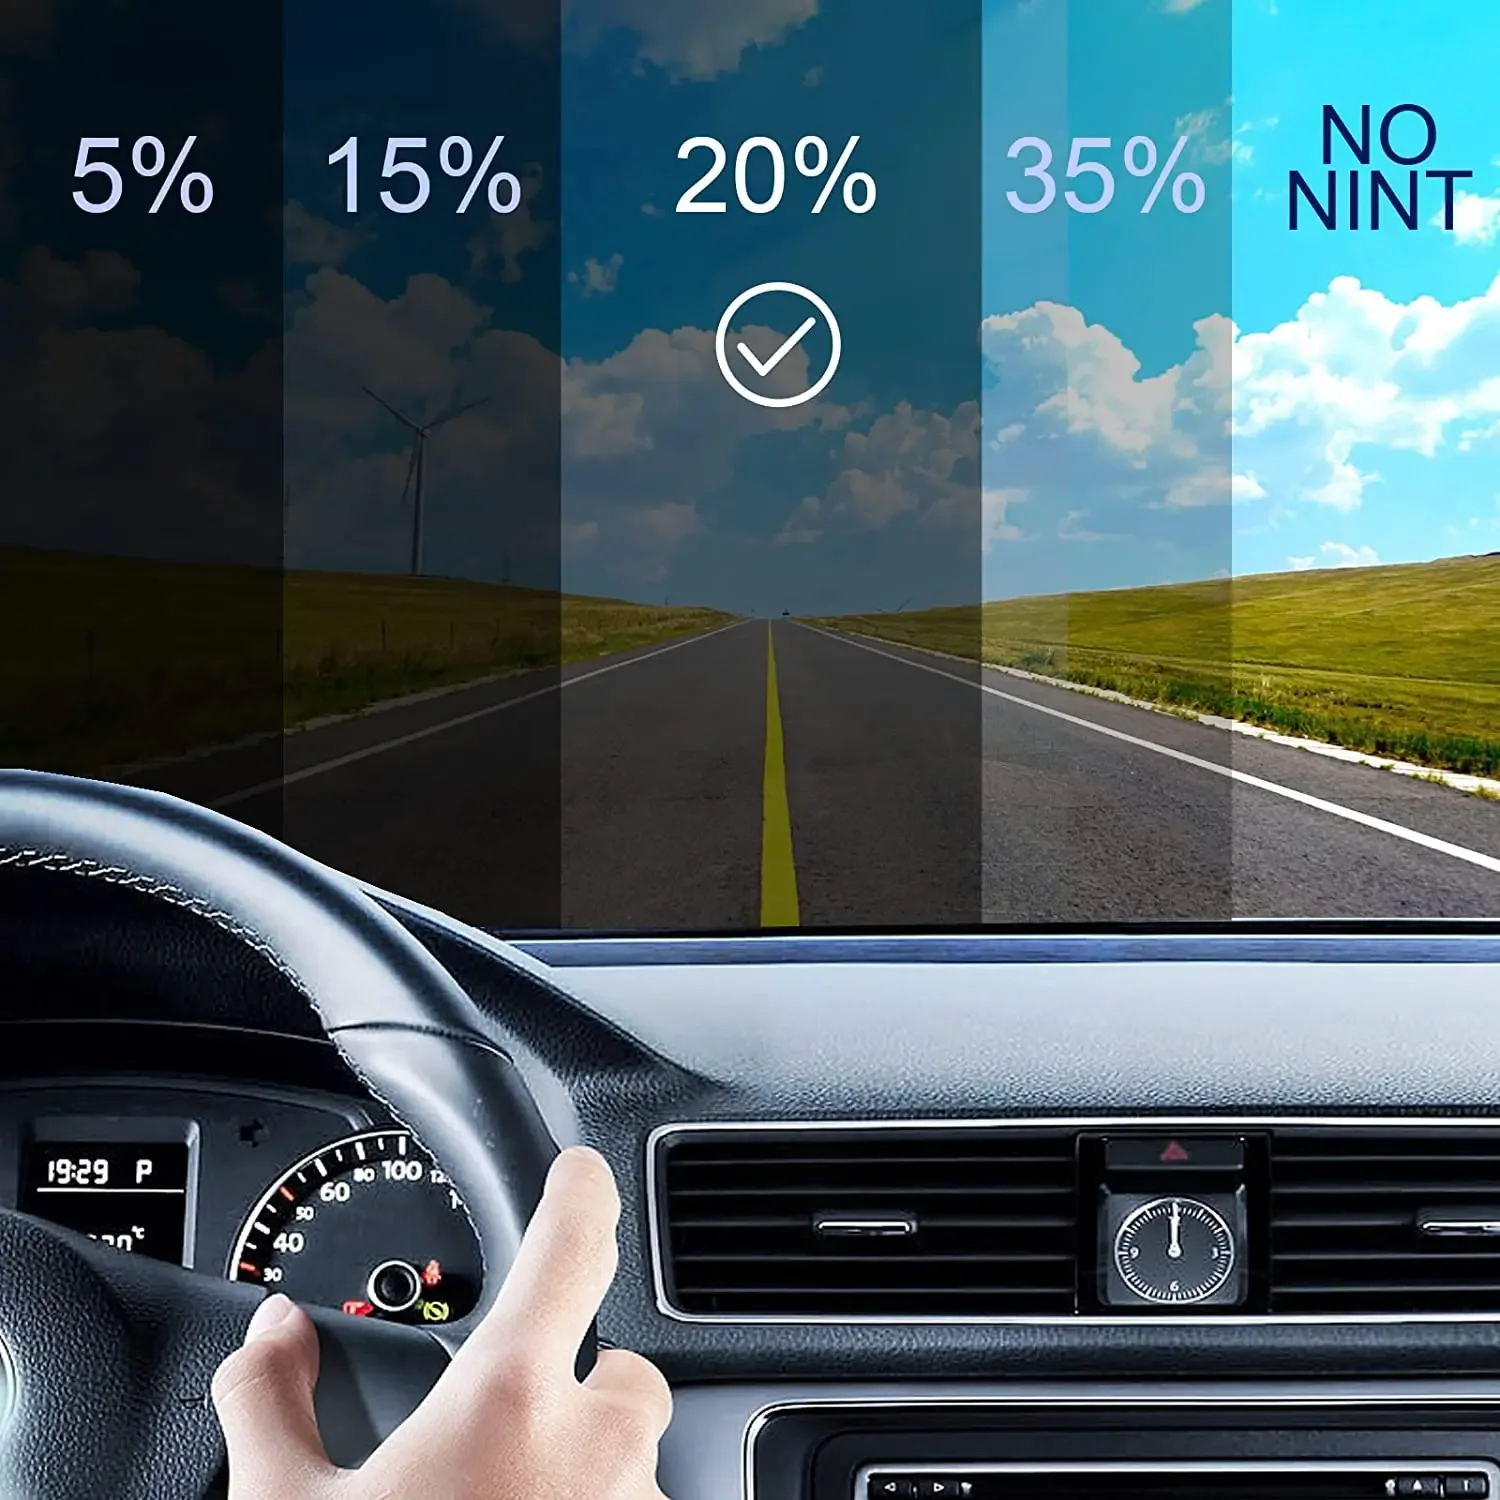 High Performance 5% VLT Auto Window Tinting Film